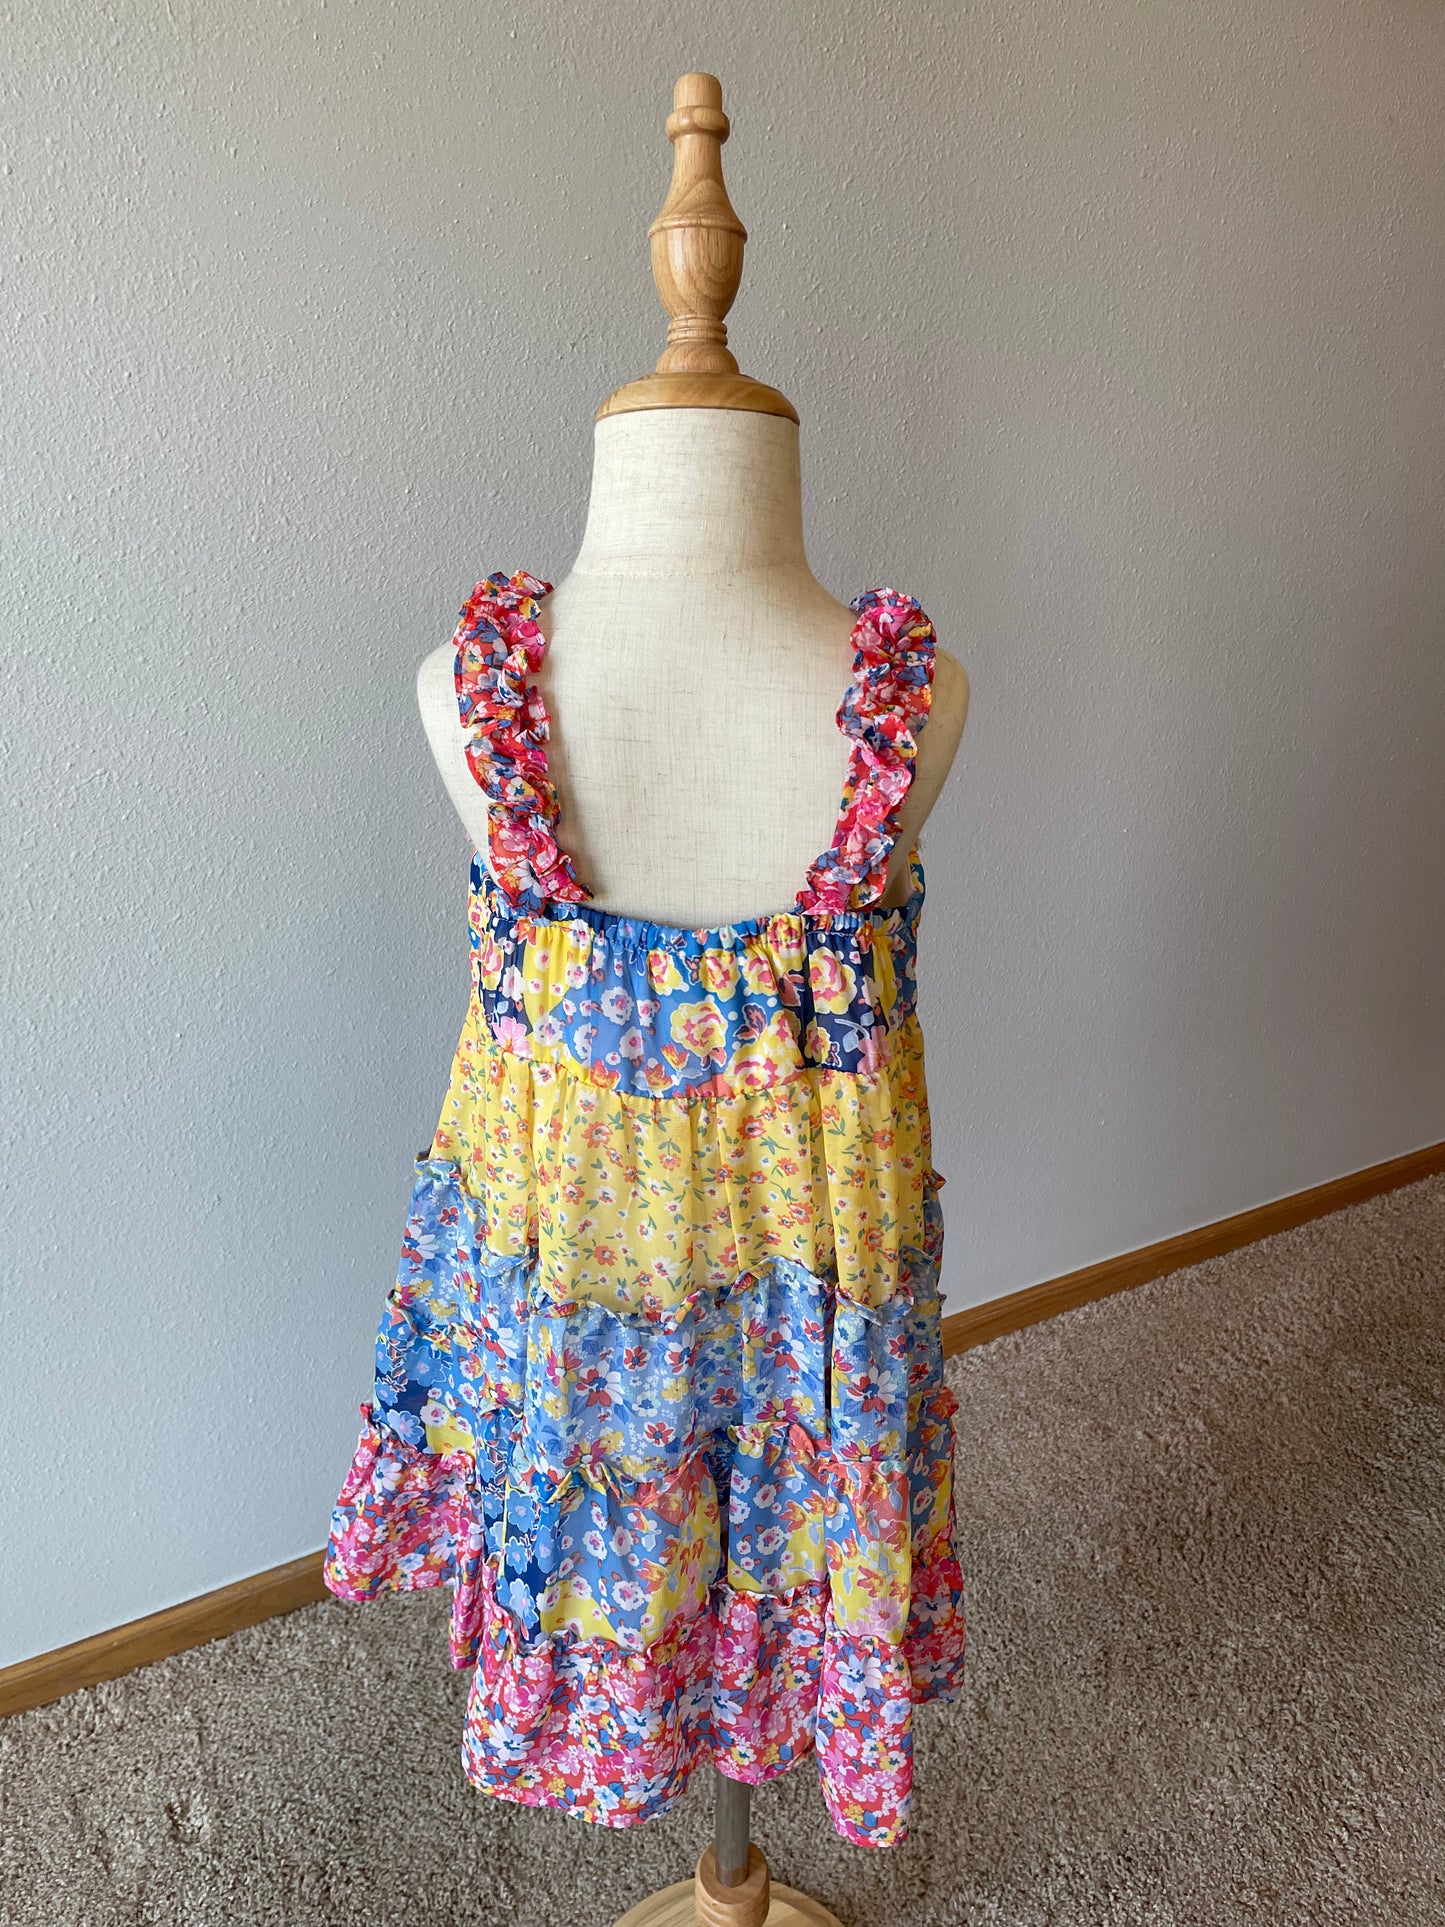 Jona Michelle Layered Summer Dress (5)